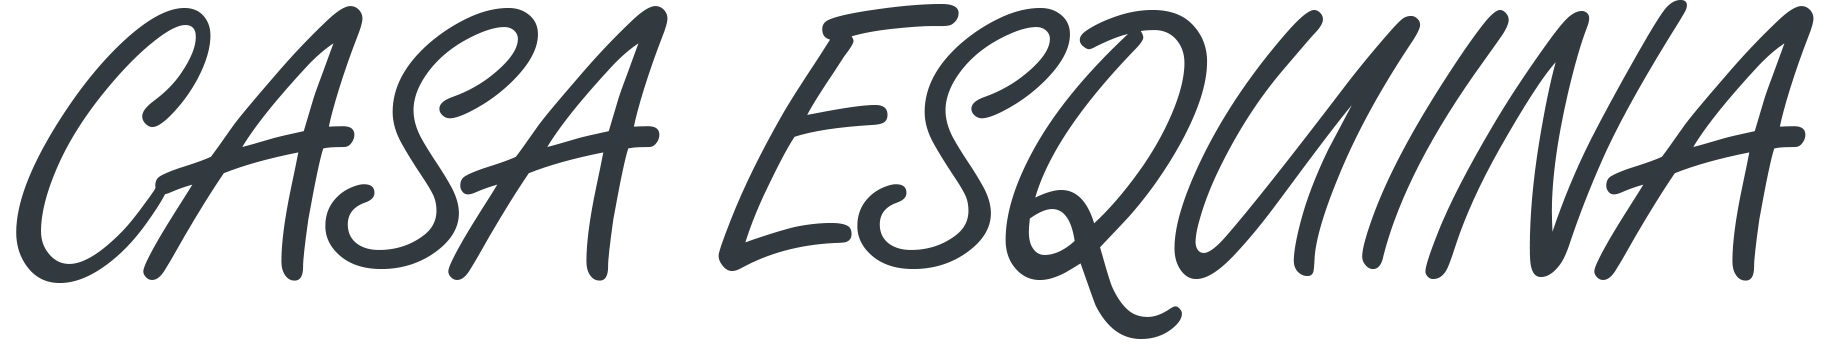 Casa Esquina logo default